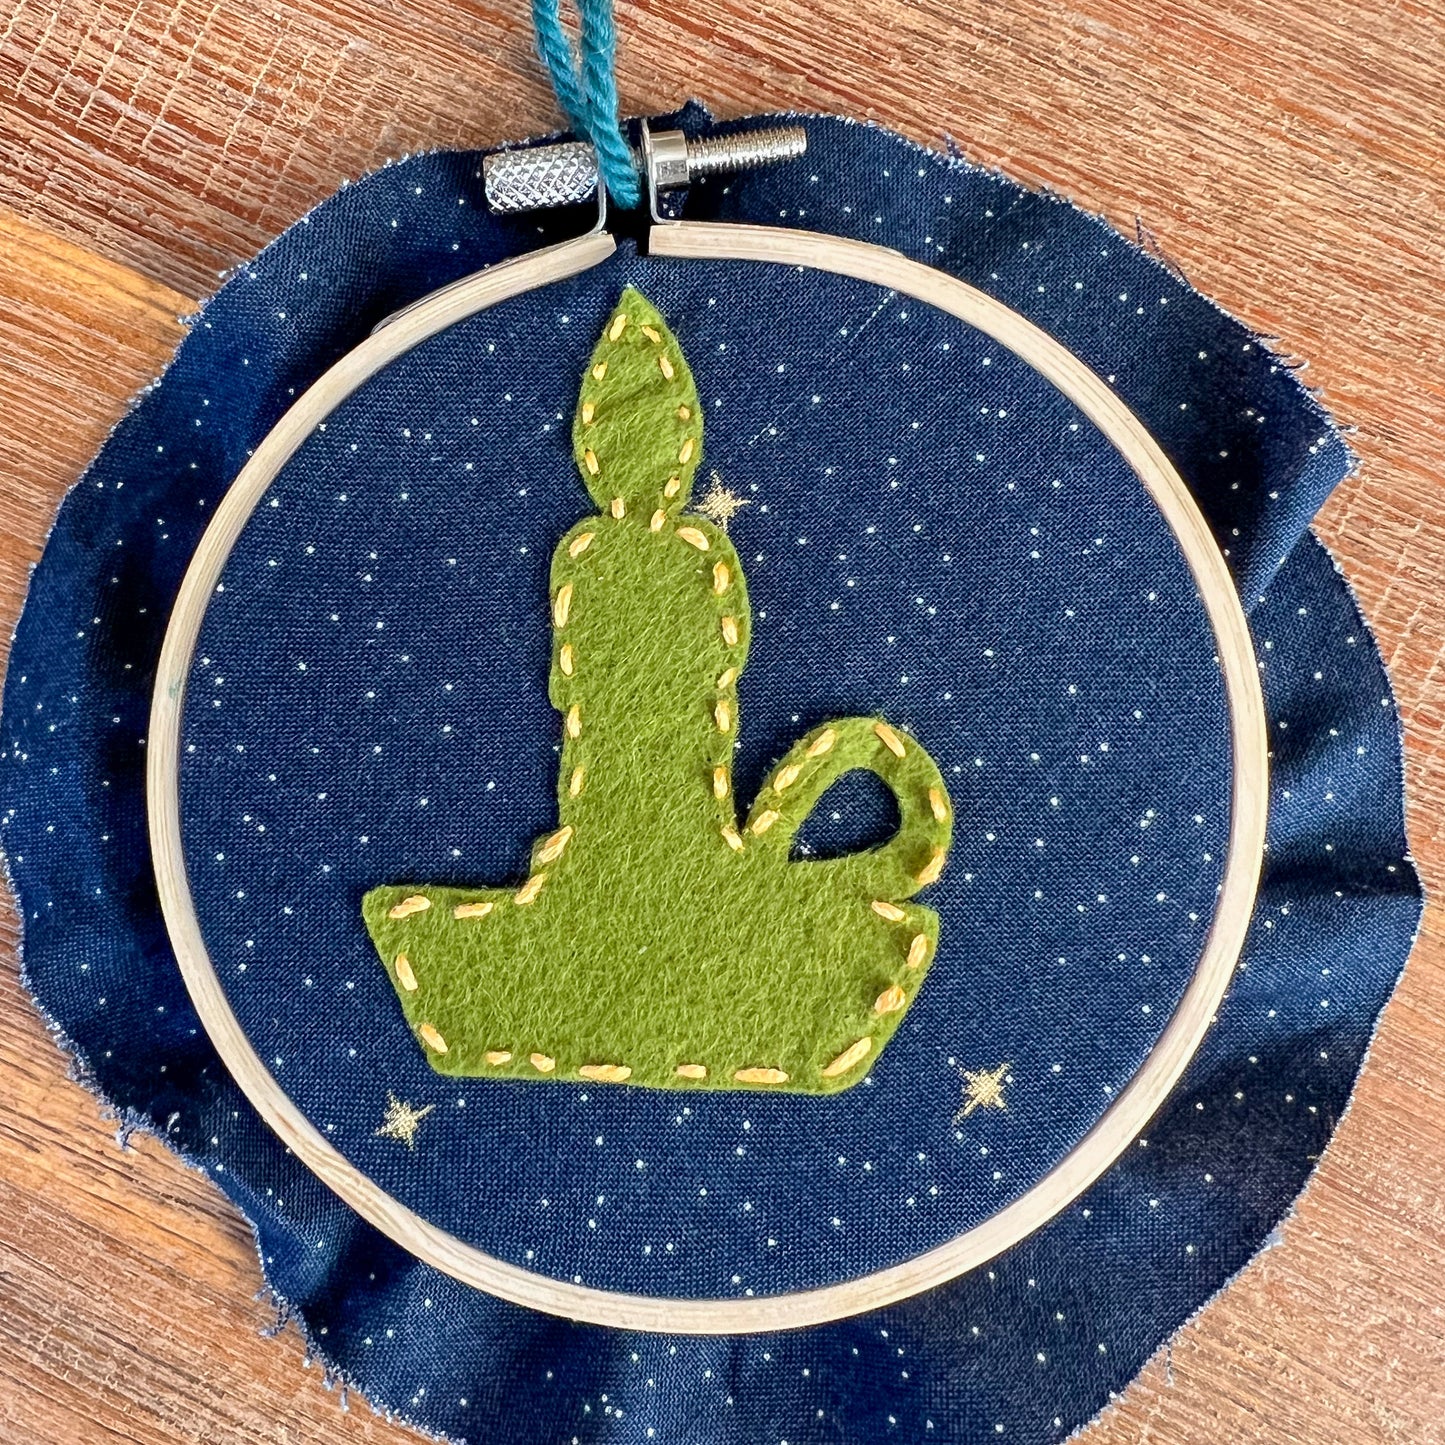 Embroidery for Kids | Ornament Complete DIY Kit for Children 3 inch hoop handmade Christmas Tree Ornament | Teacher Gift Grandparent Craft